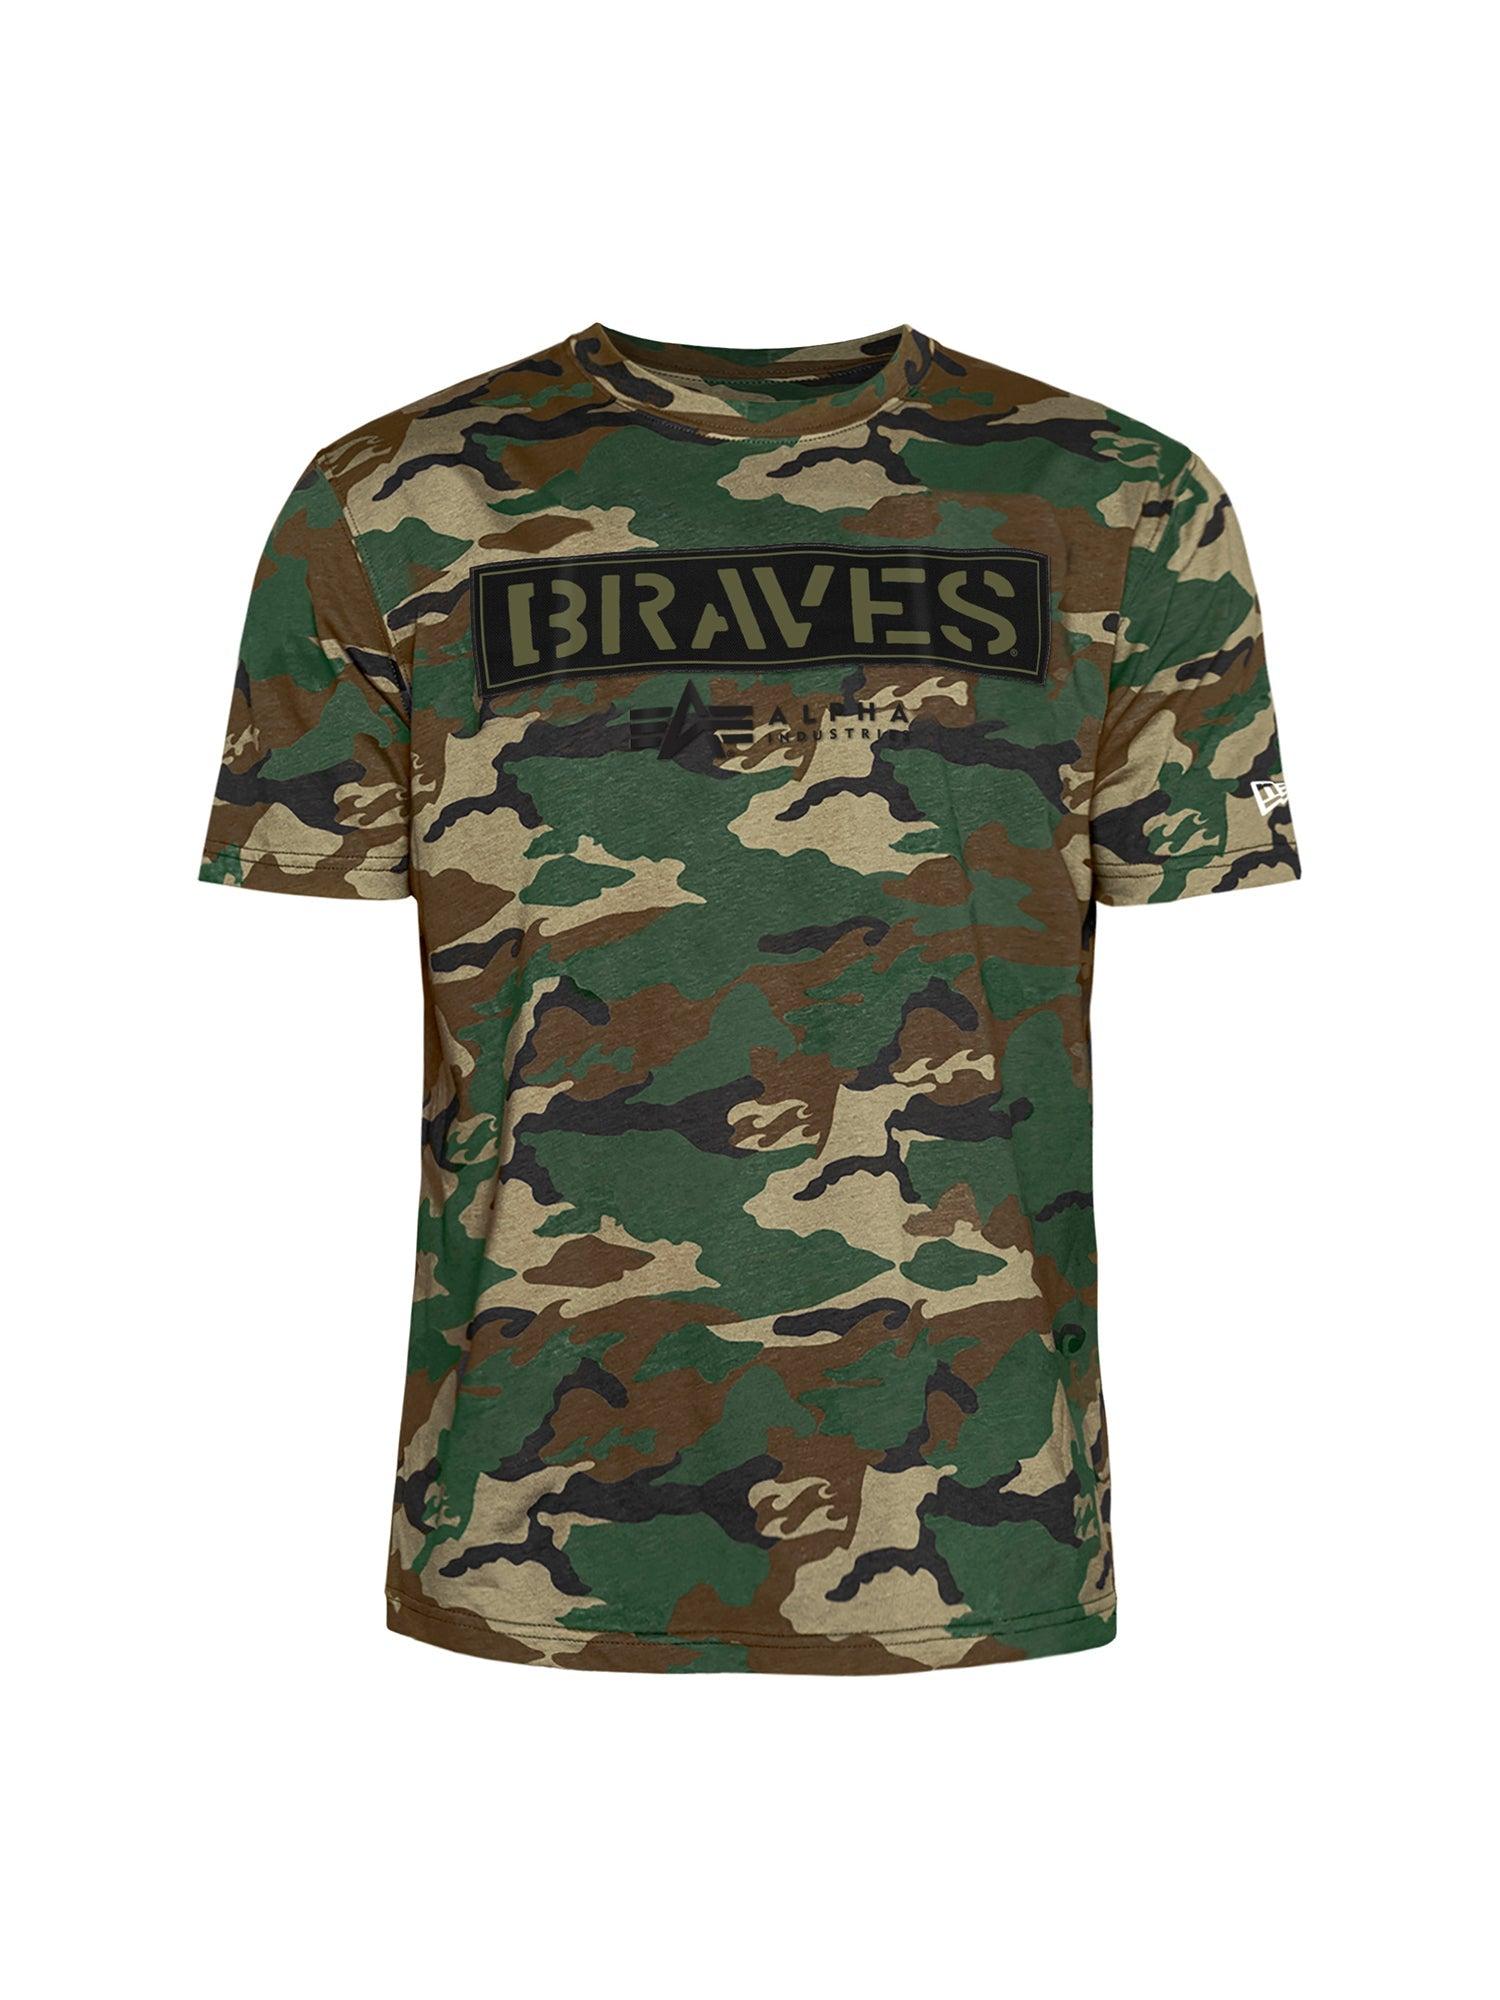 Alpha Industries Atlanta Braves X Alpha X New Era Camo T-shirt in